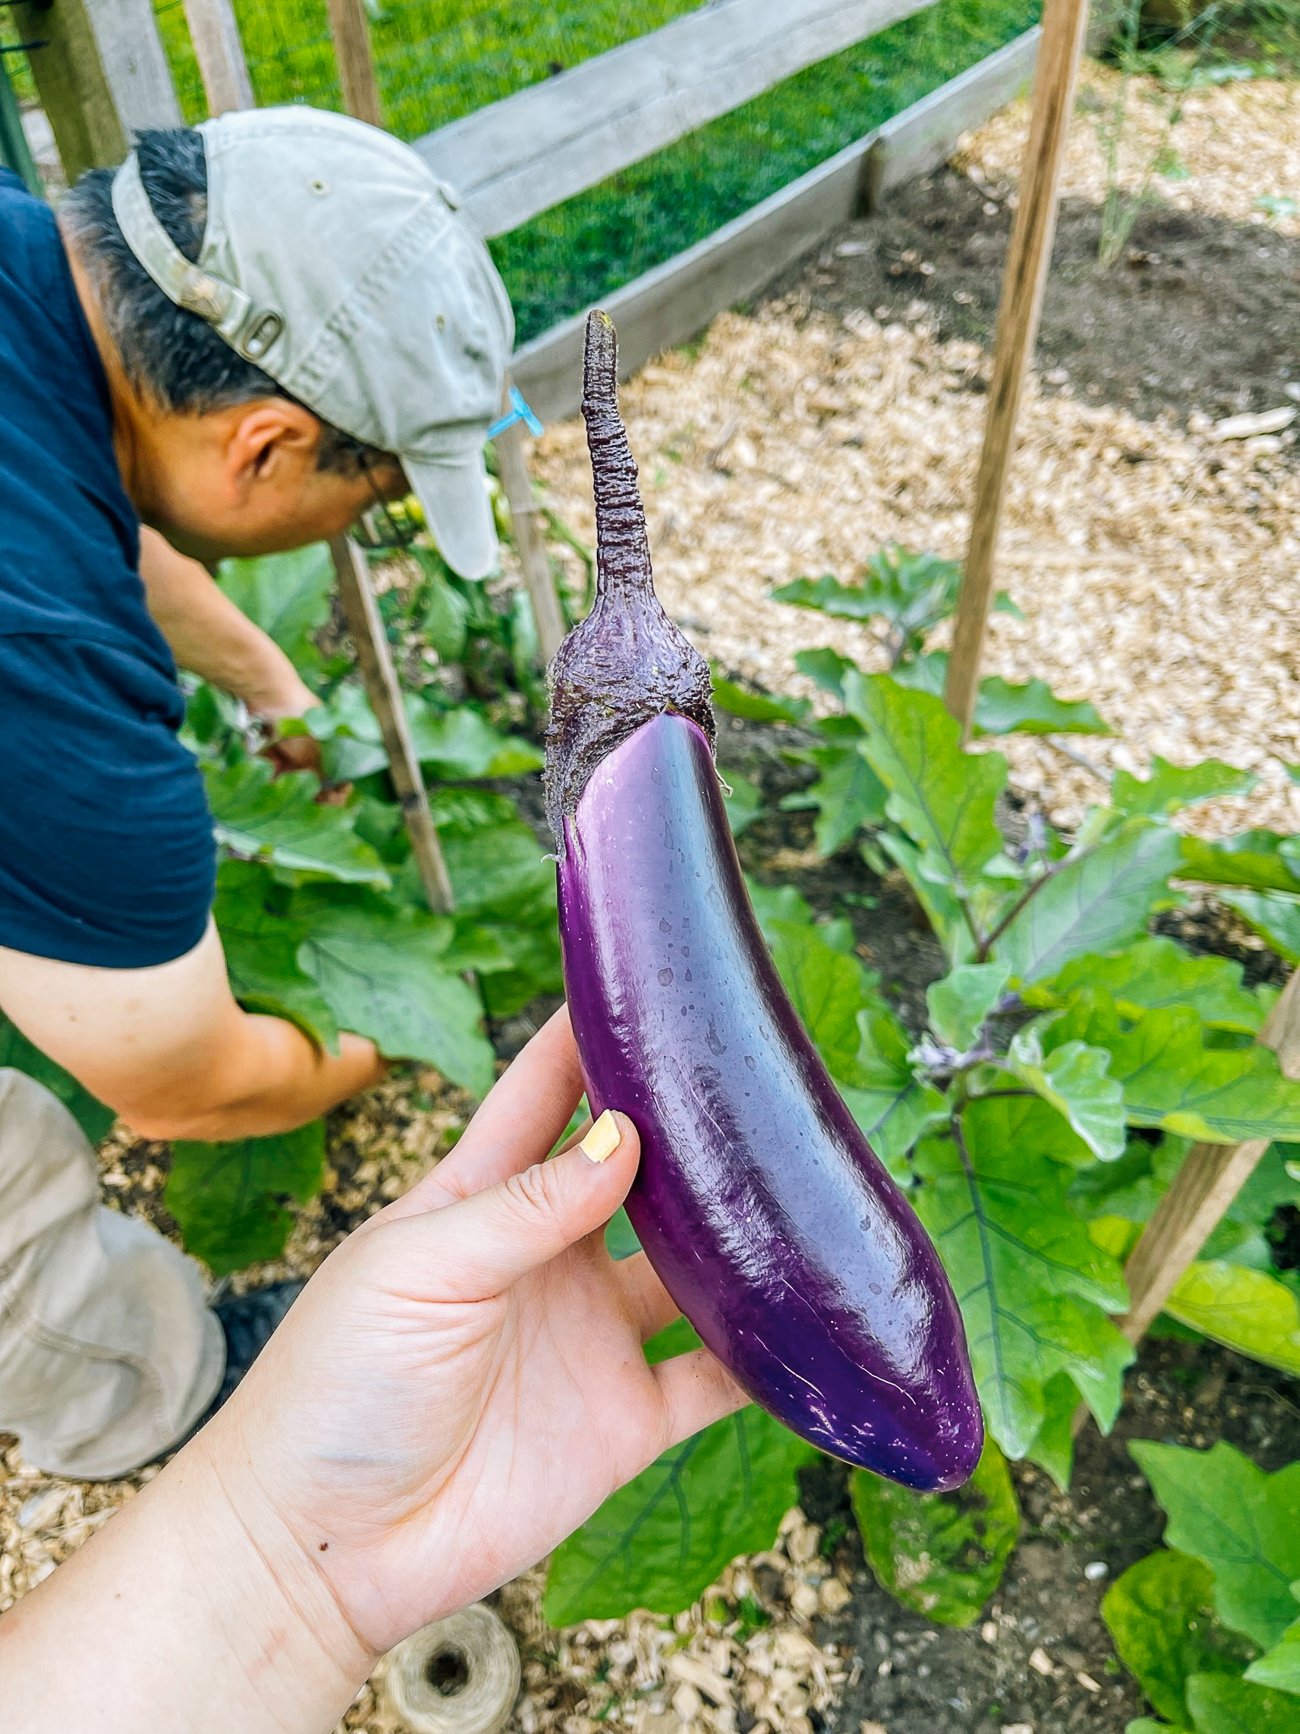 Harvesting Asian eggplant